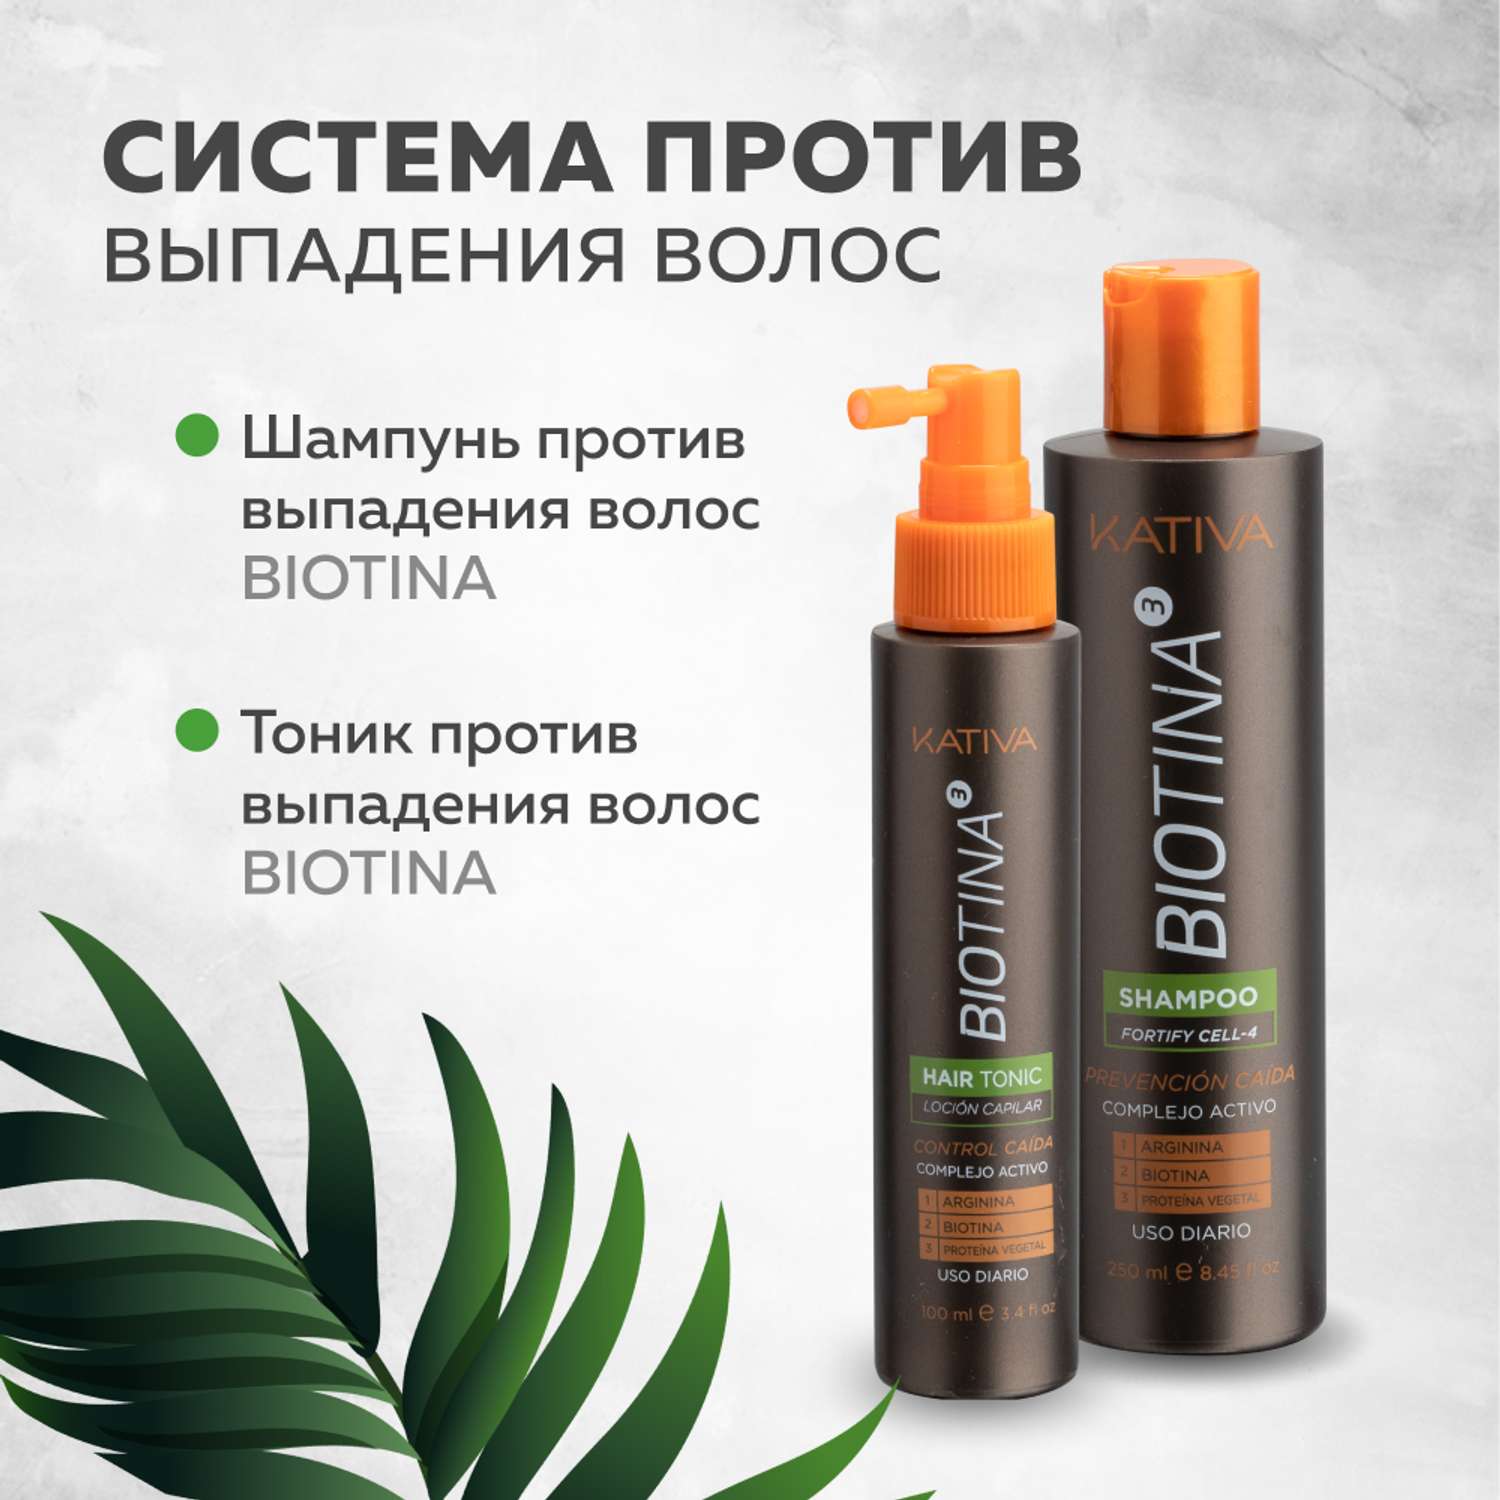 Концентрат Kativa против выпадения волос в ампулах Biotina 12 шт по 4 мл - фото 5